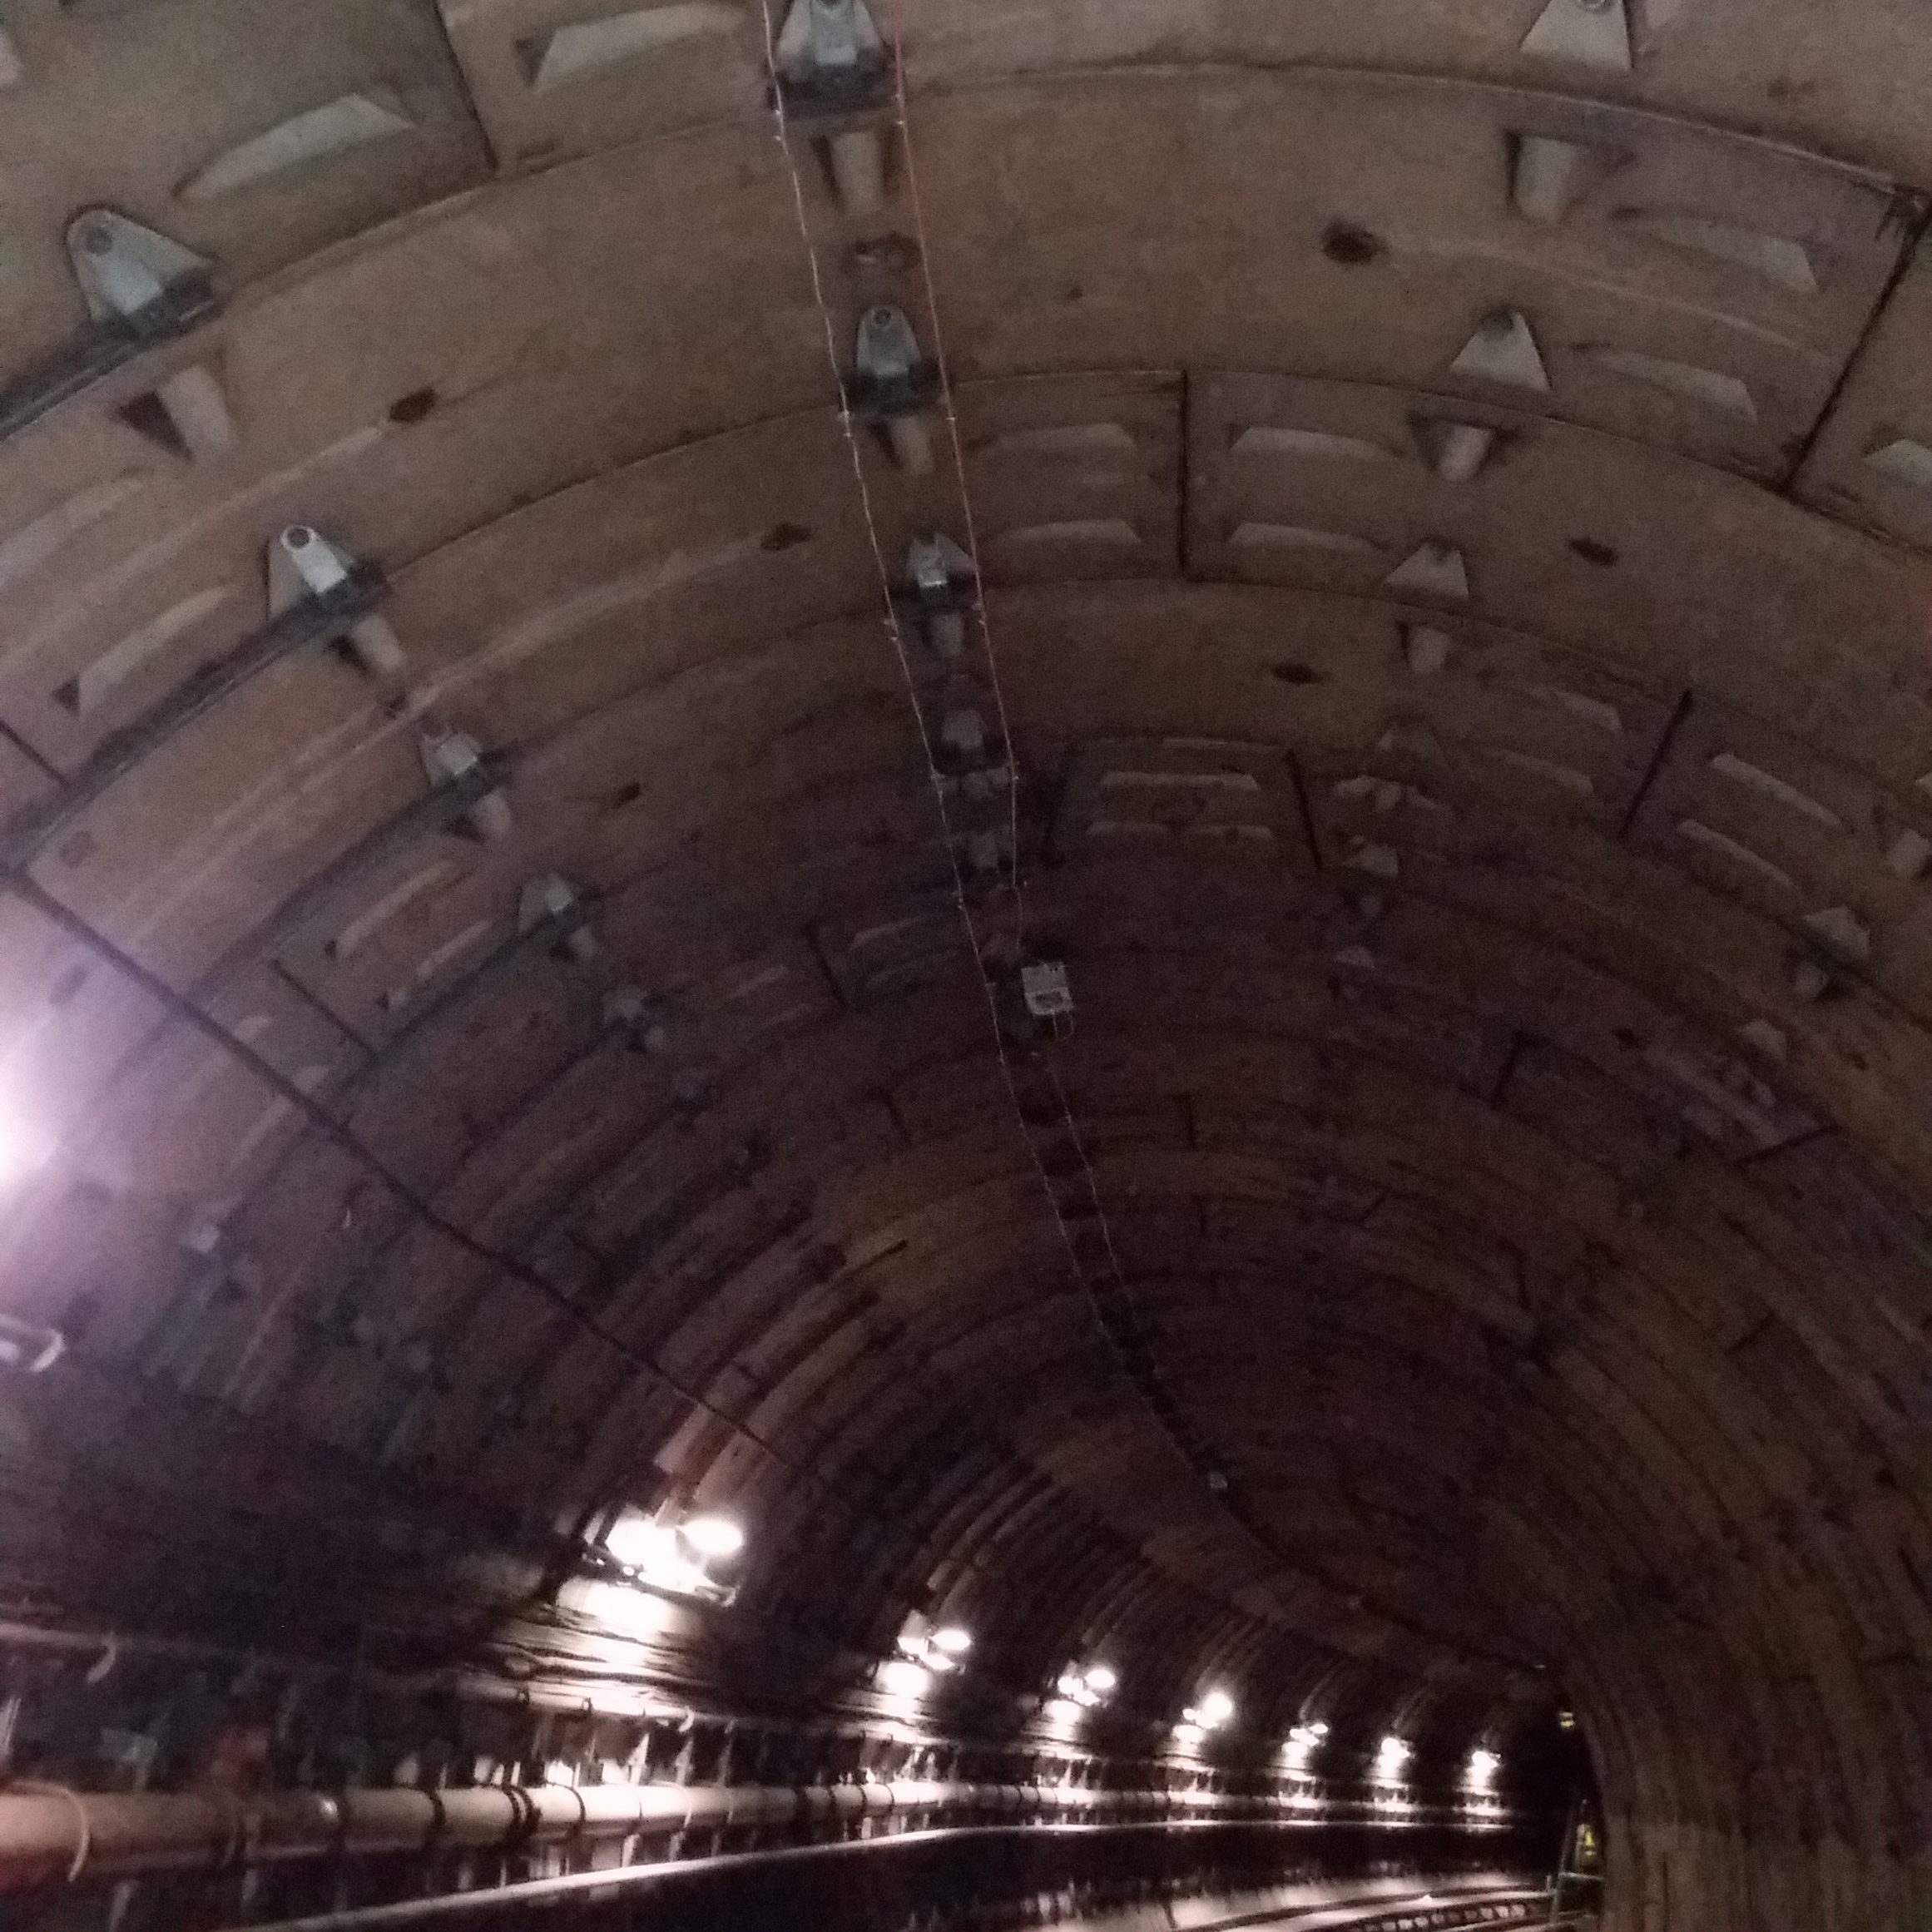 FyreLine in the Malaysian MRT Tunnel